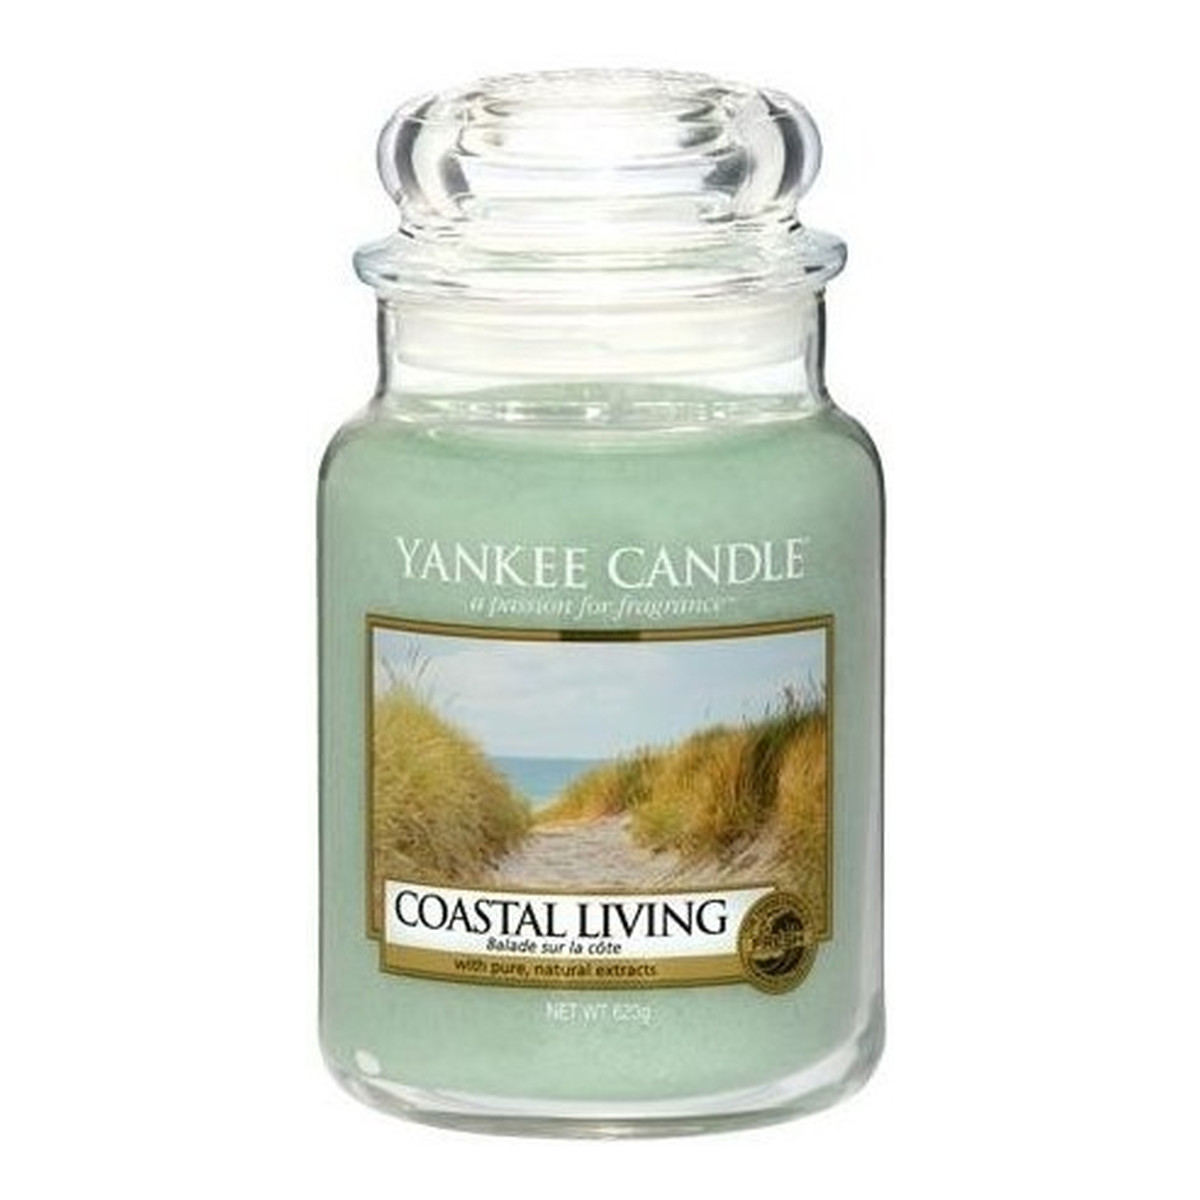 Yankee Candle Large Jar Duża świeczka zapachowa Coastal Living 623g